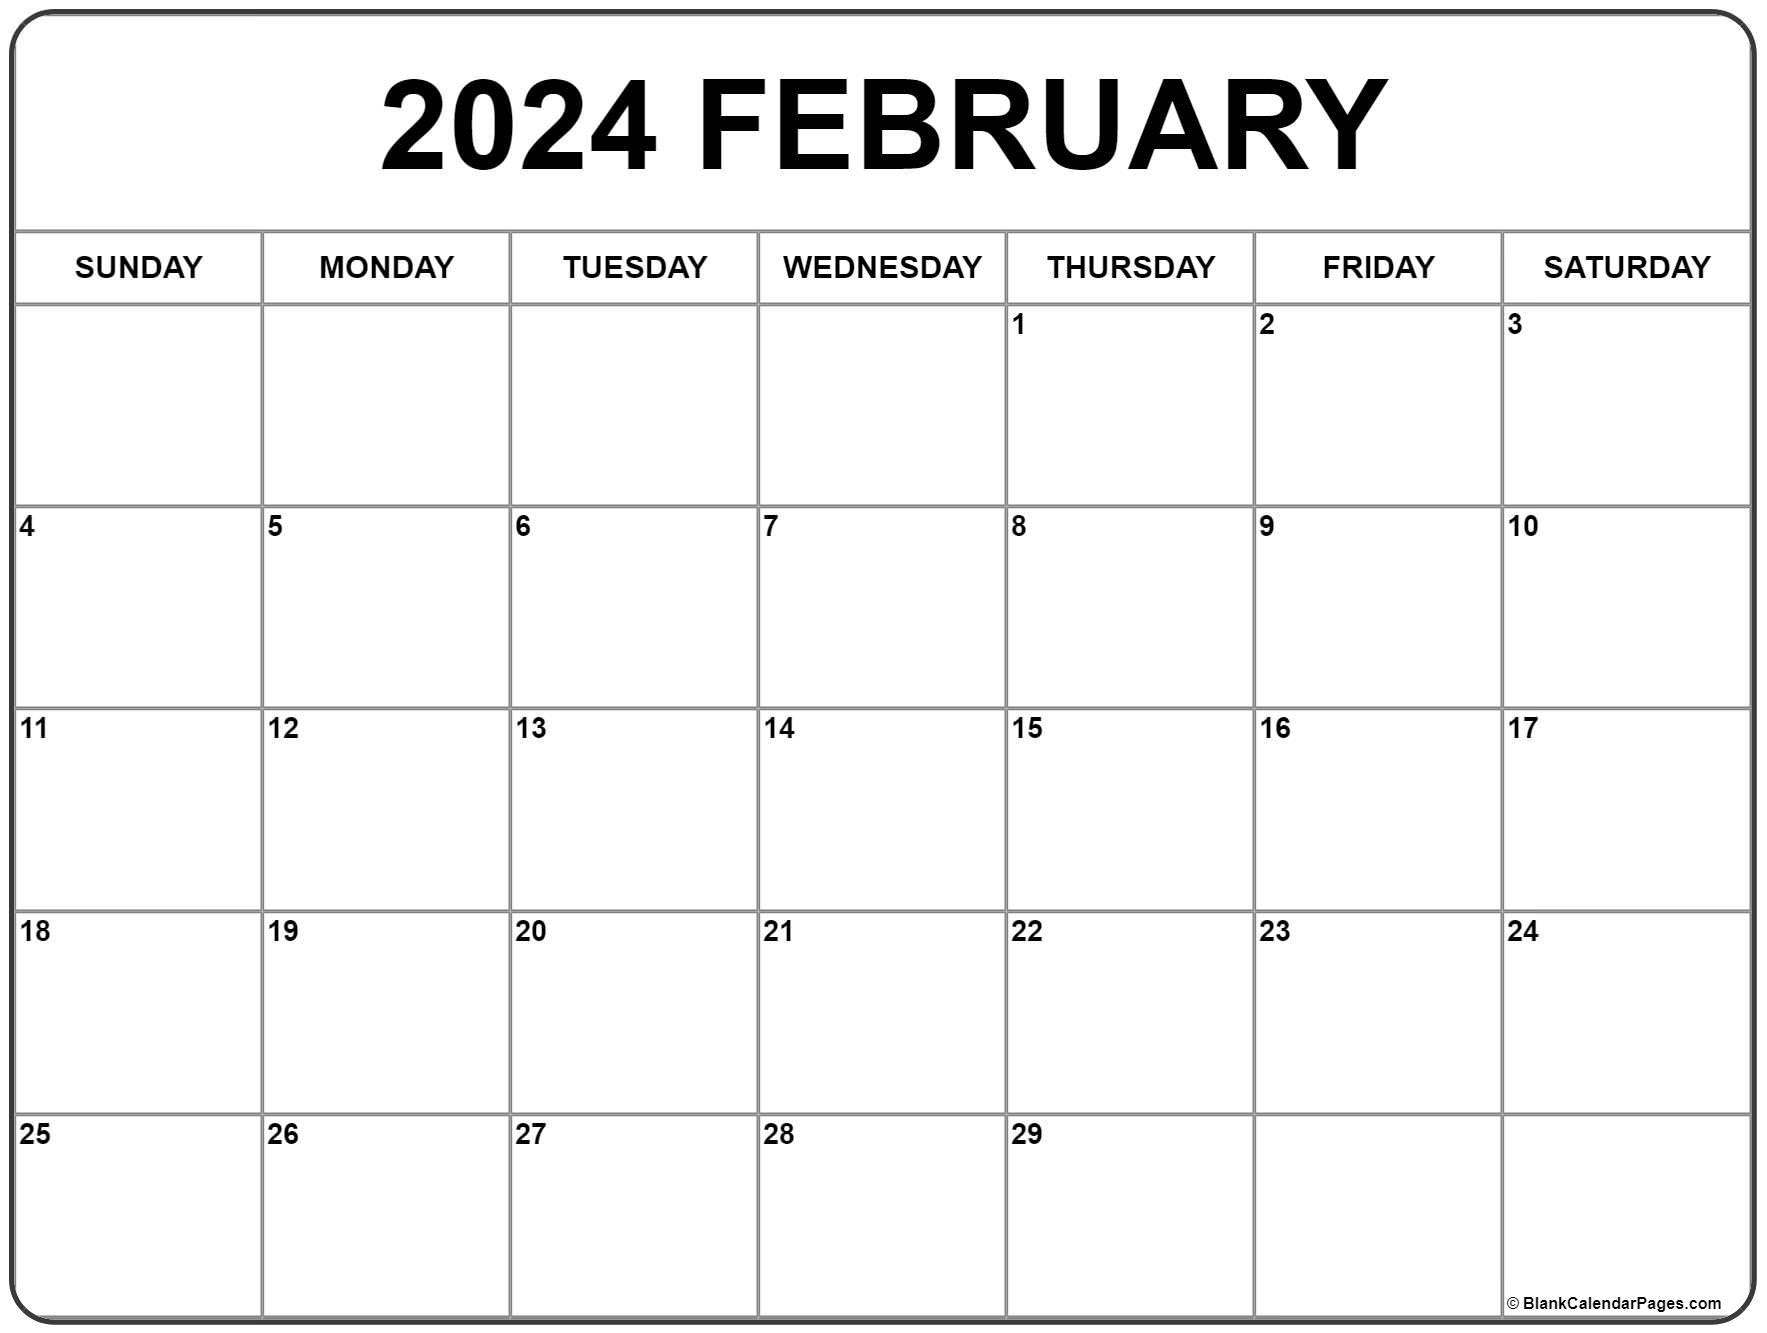 February Calendar 2021 Printable February 2021 calendar | free printable monthly calendars